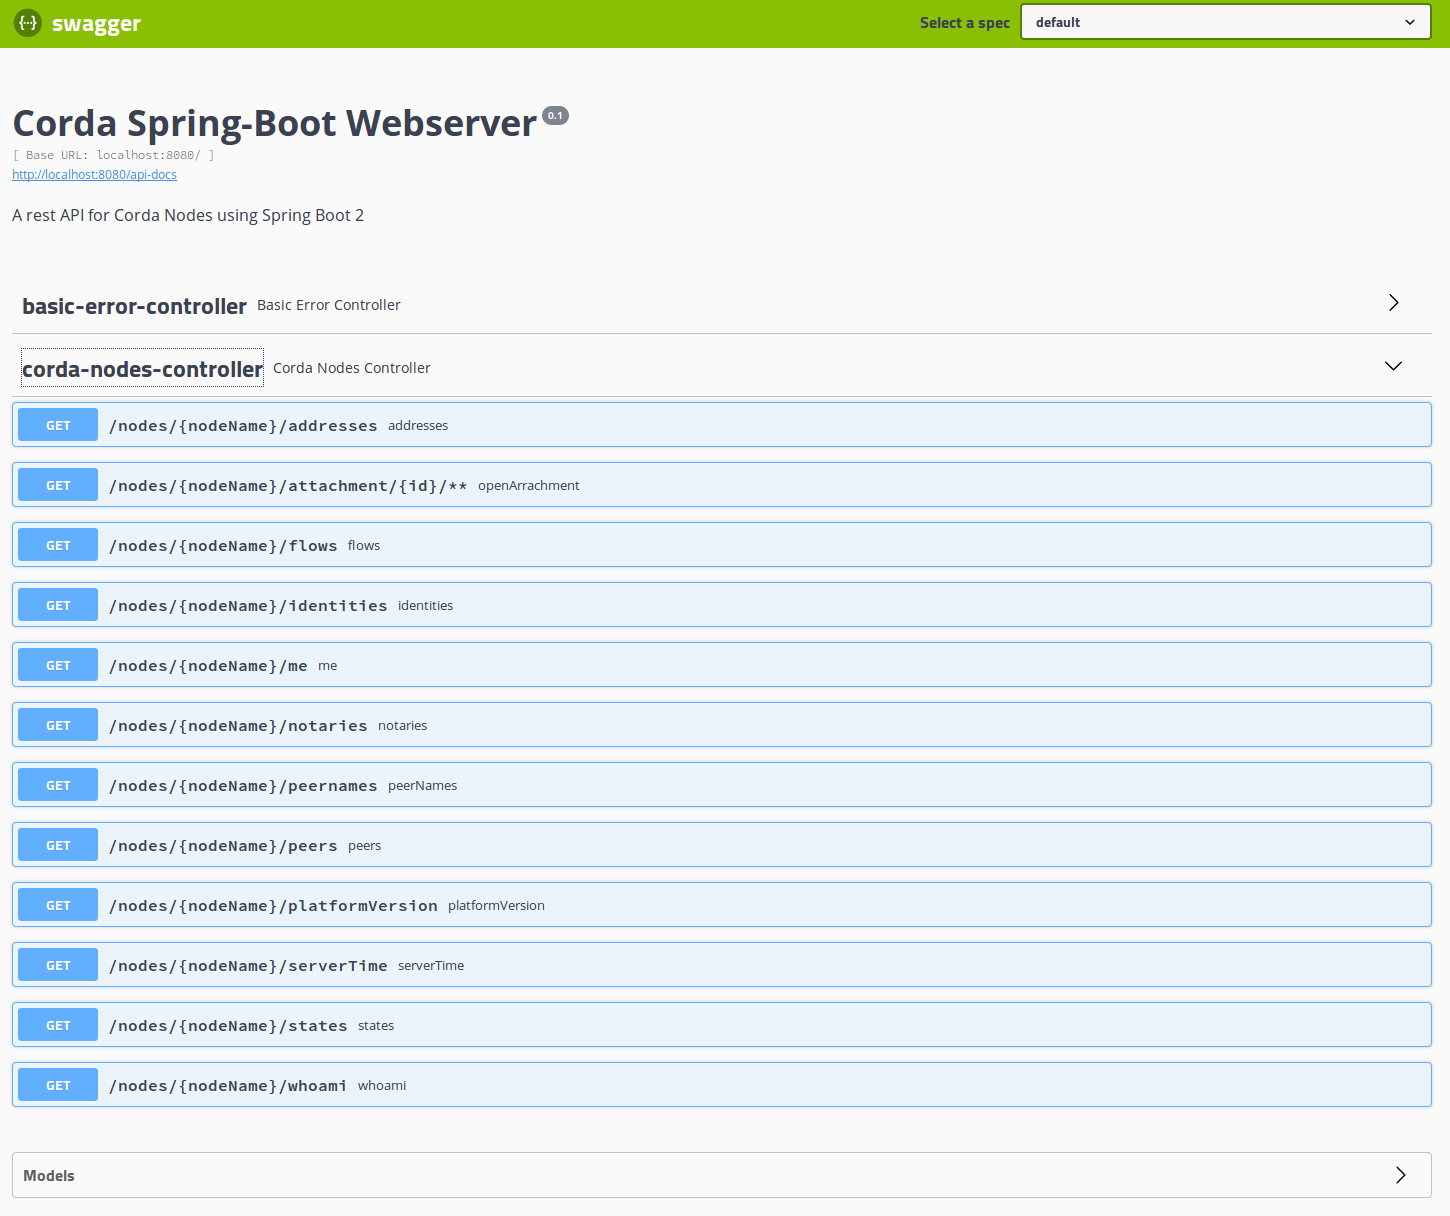 Corda Webserver Boot'sSwagger UI